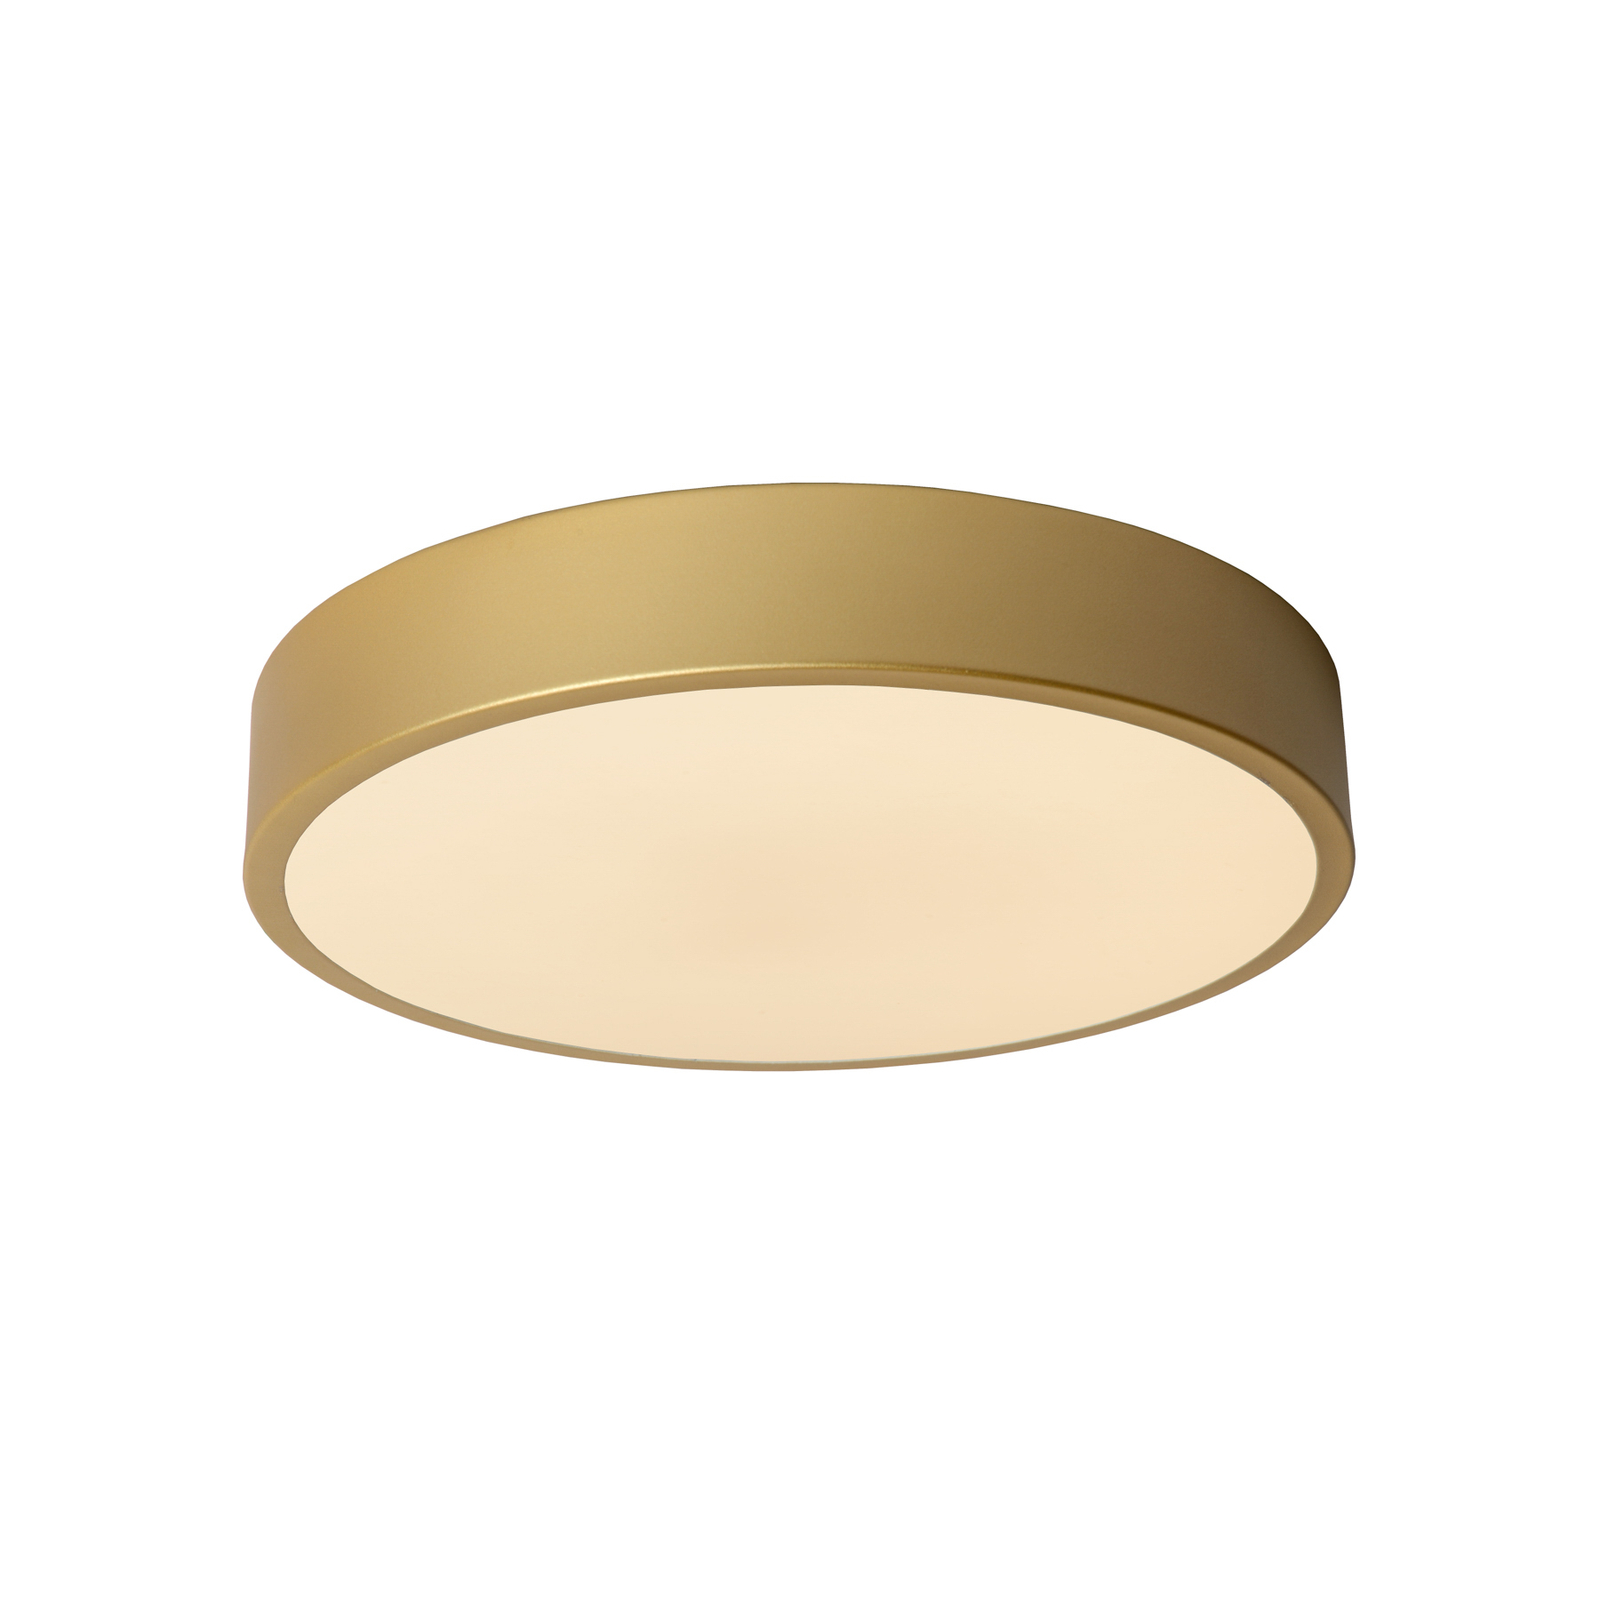 LED-loftslampe Unar, guld mat, Ø 30 cm